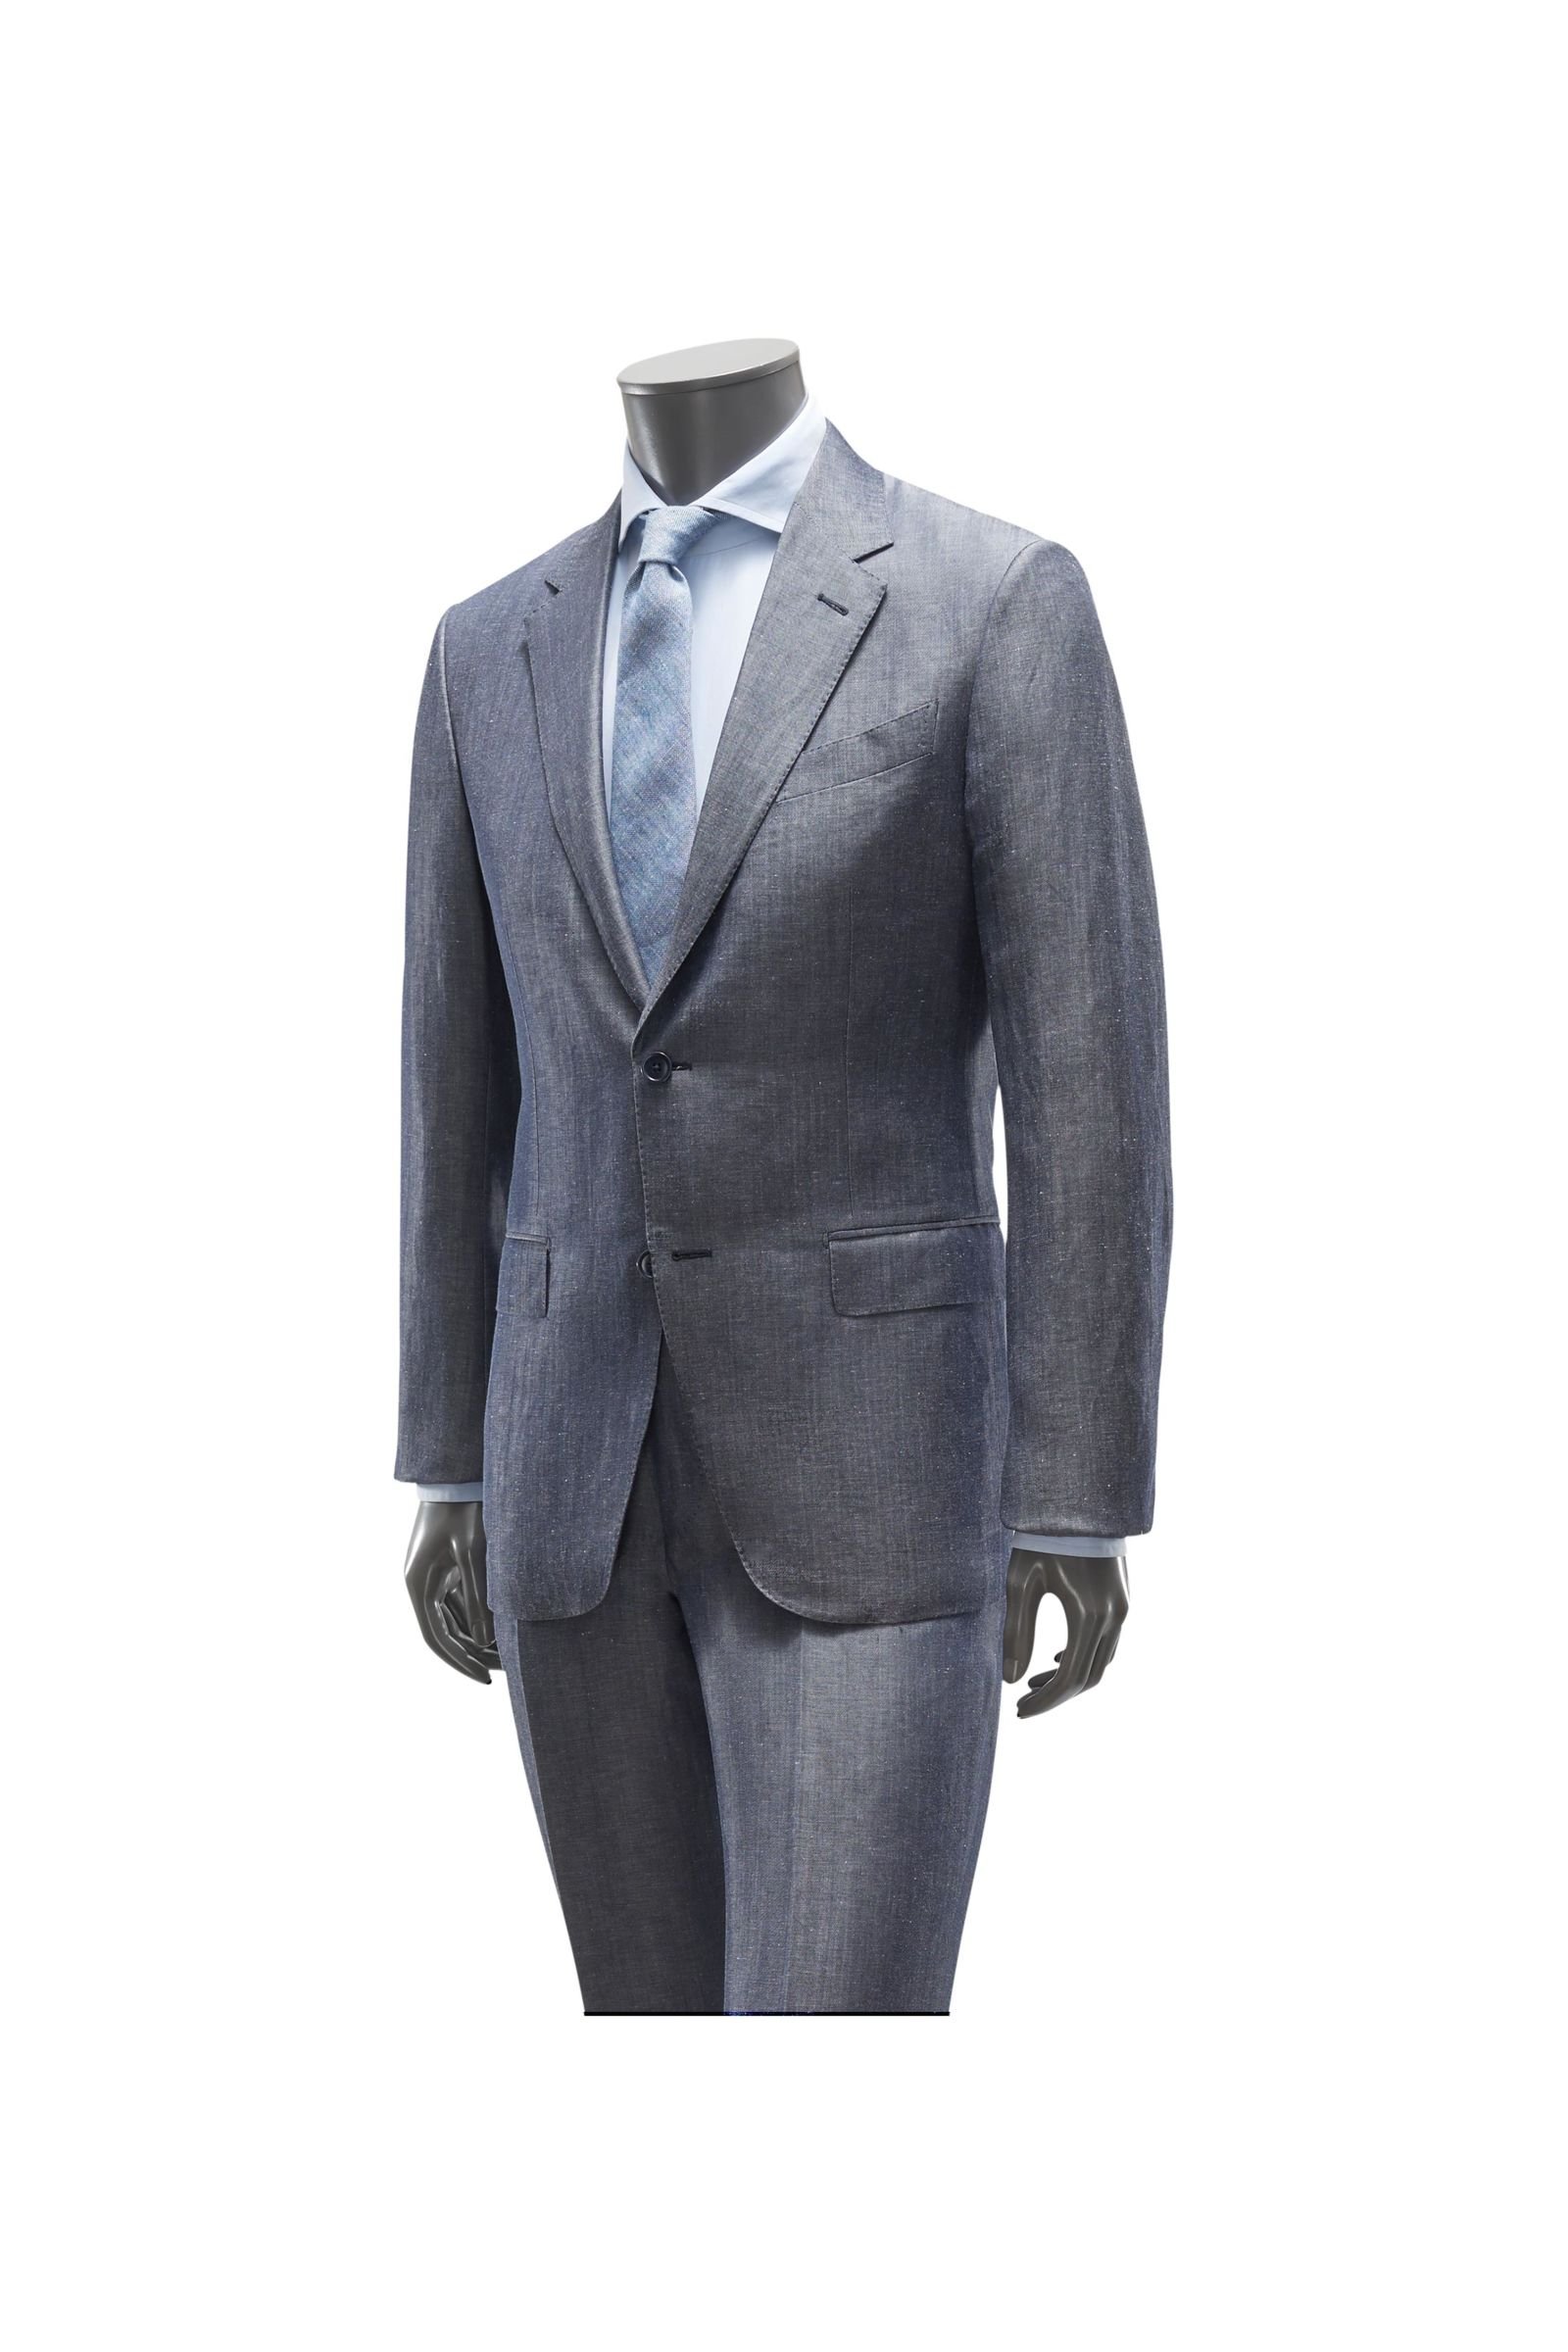 Suit 'Milano Easy Slim Fit' grey-blue